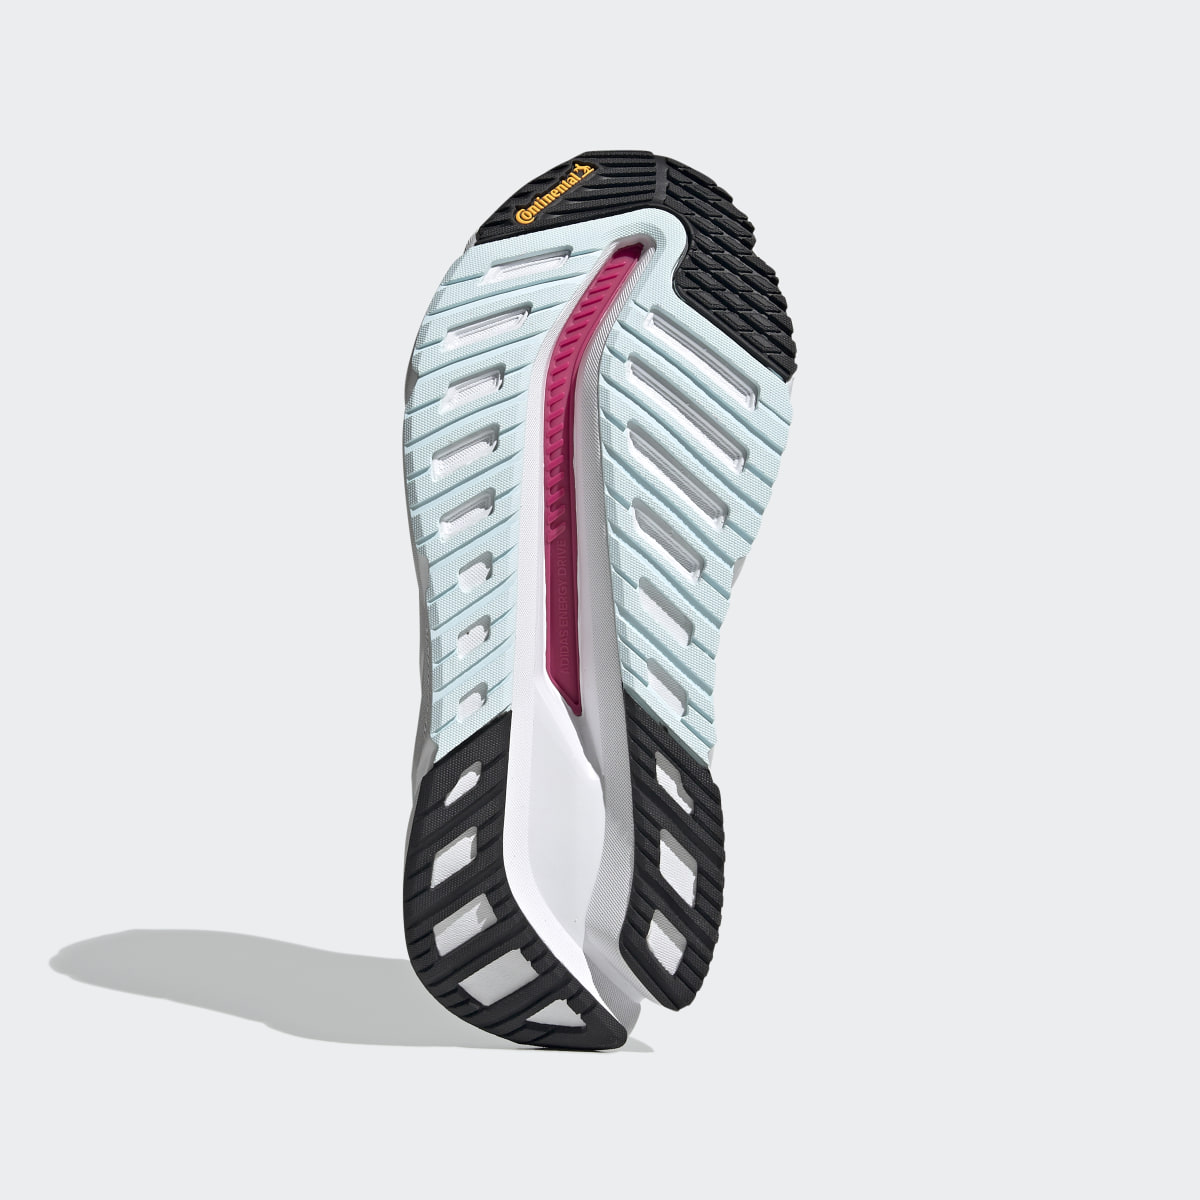 Adidas Scarpe adistar CS. 4